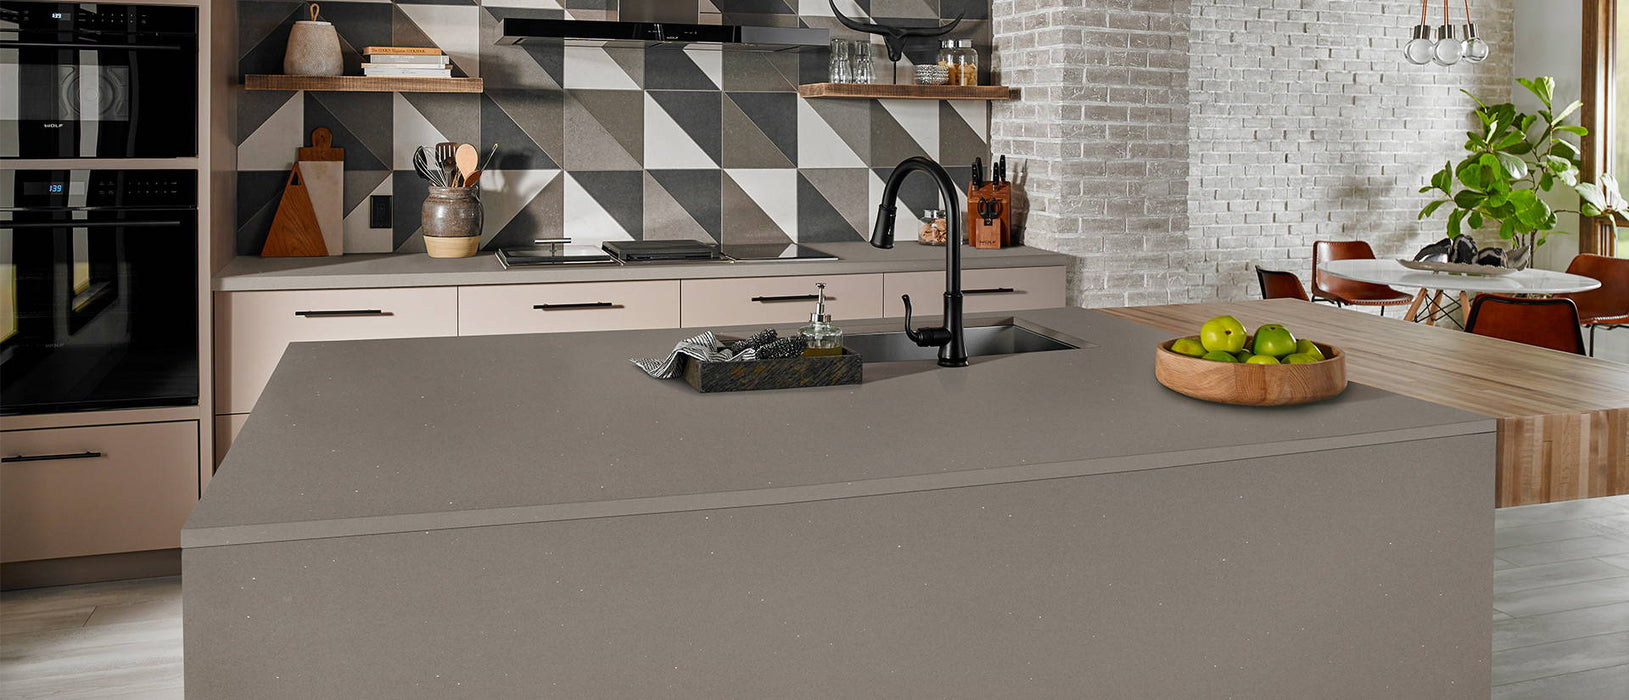 Stellar gray quartz countertop kitchen scene